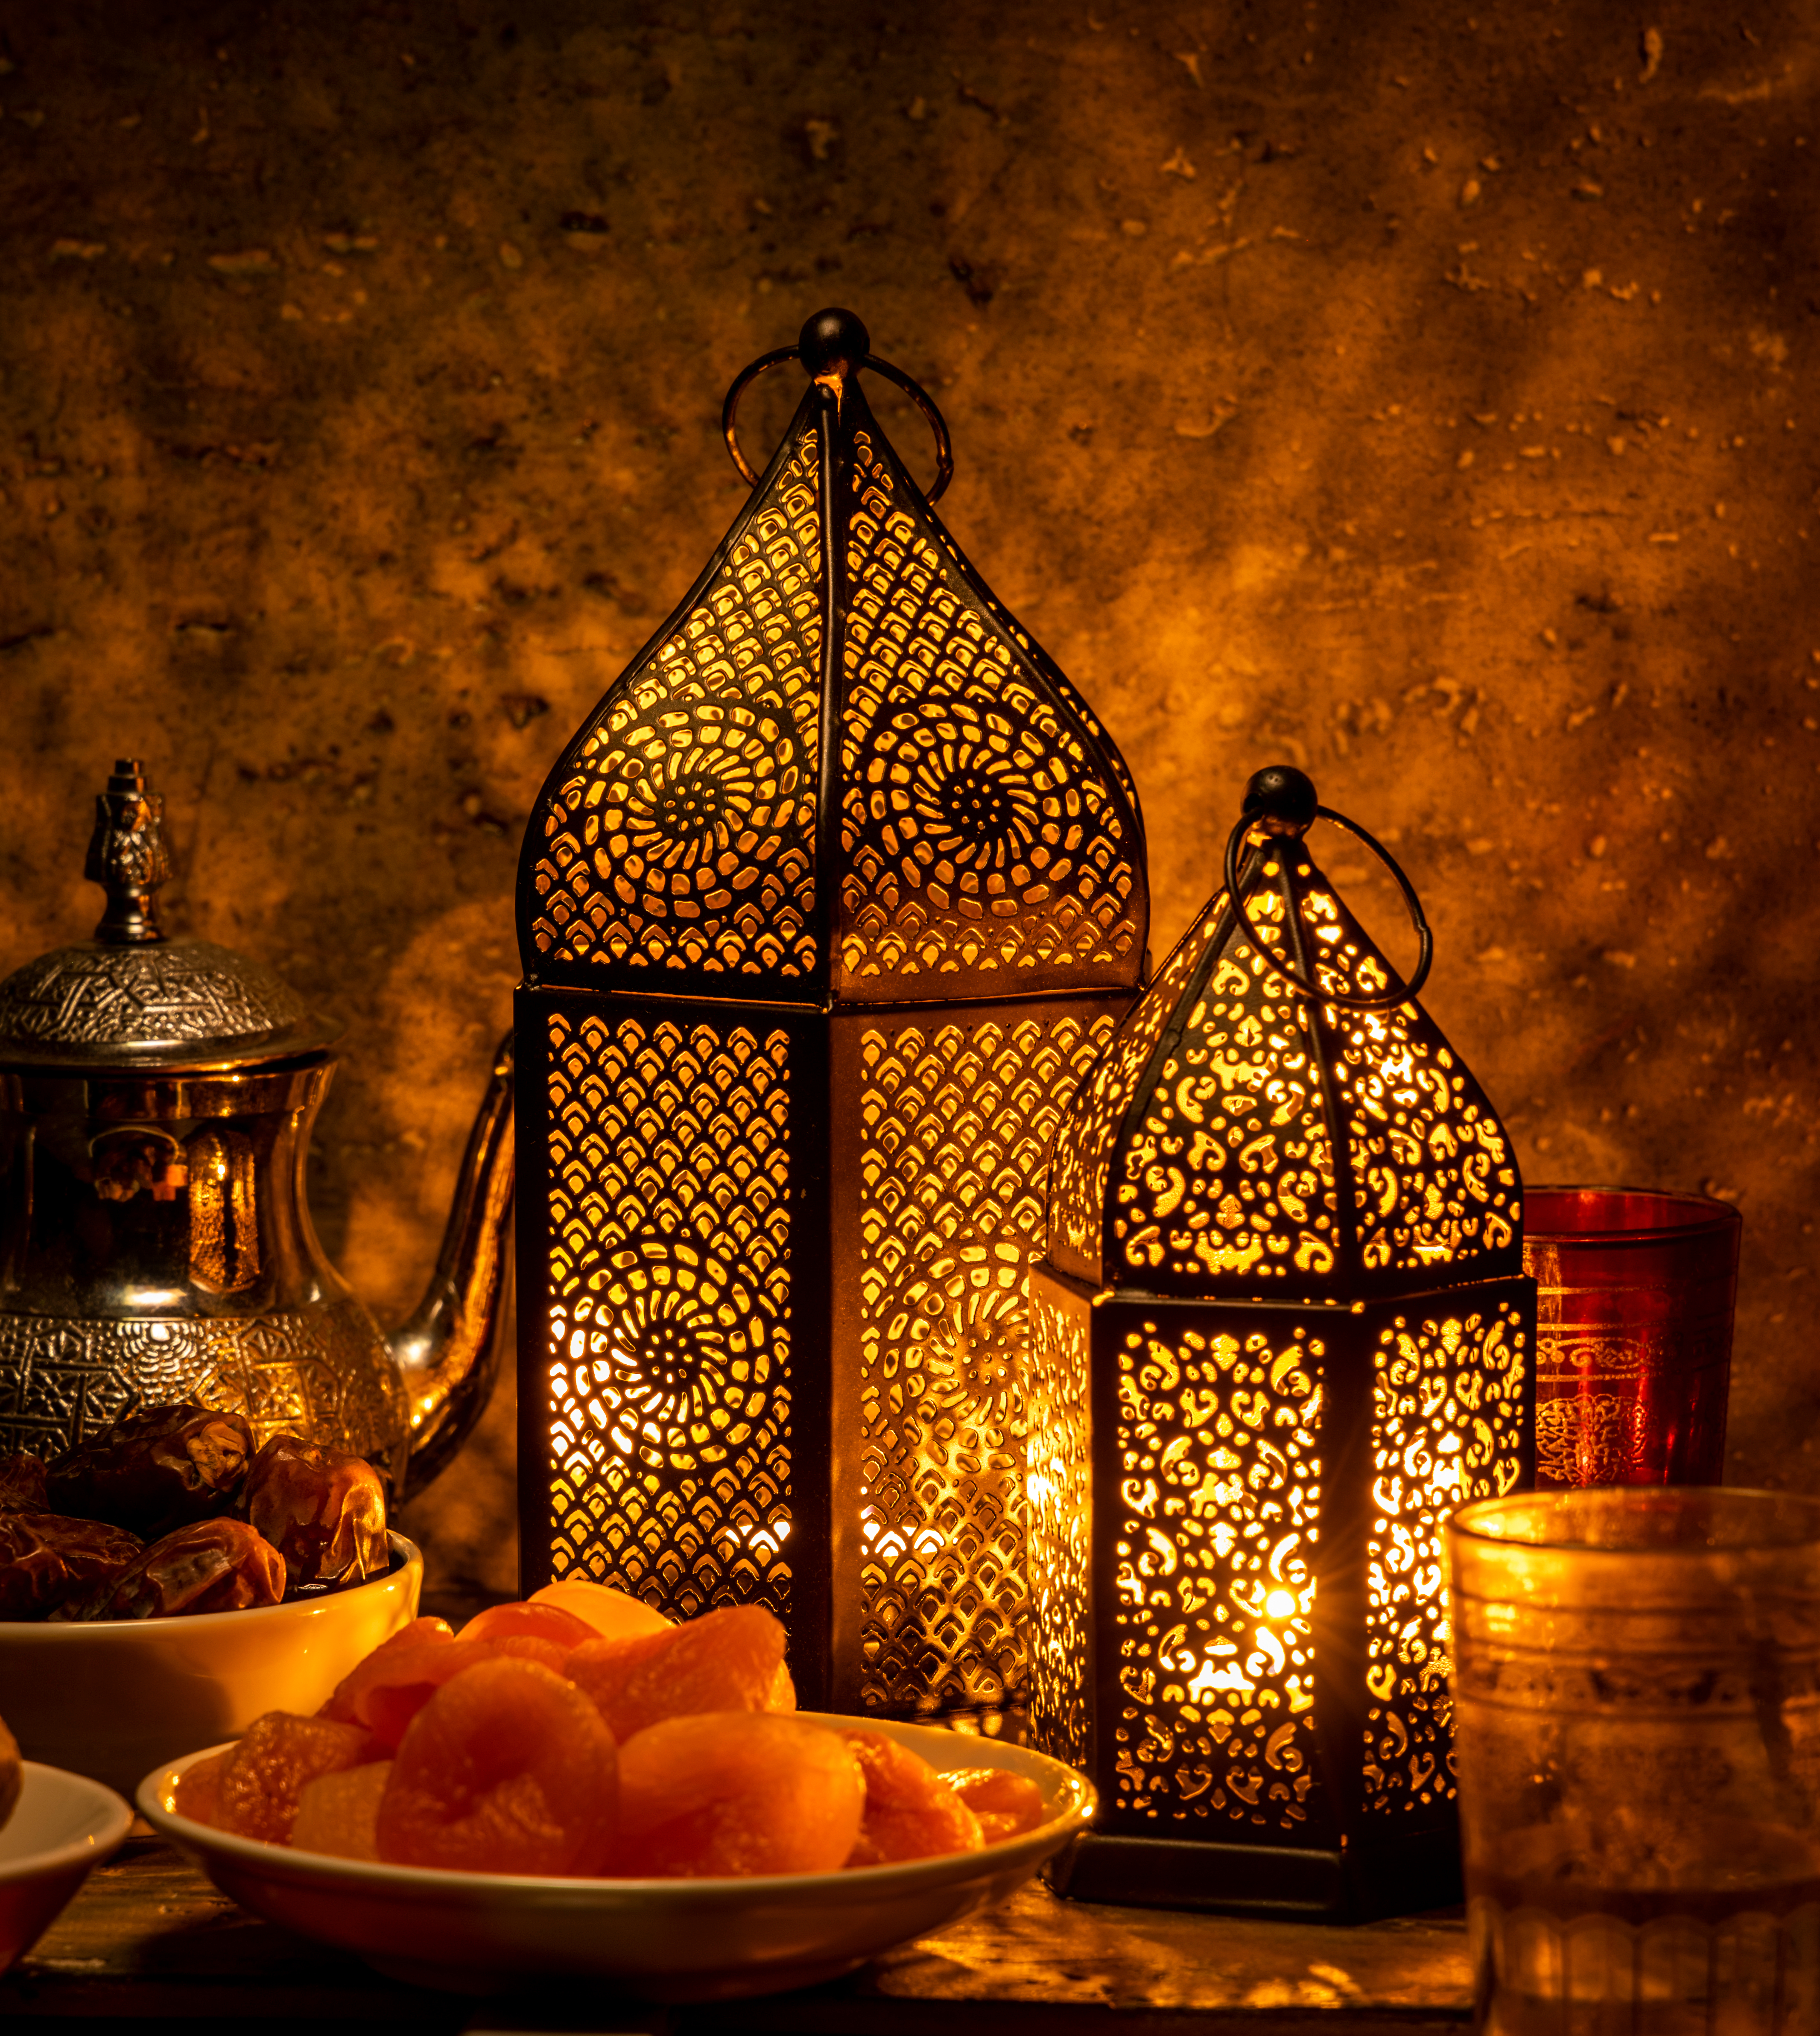 Ramadan lanterns